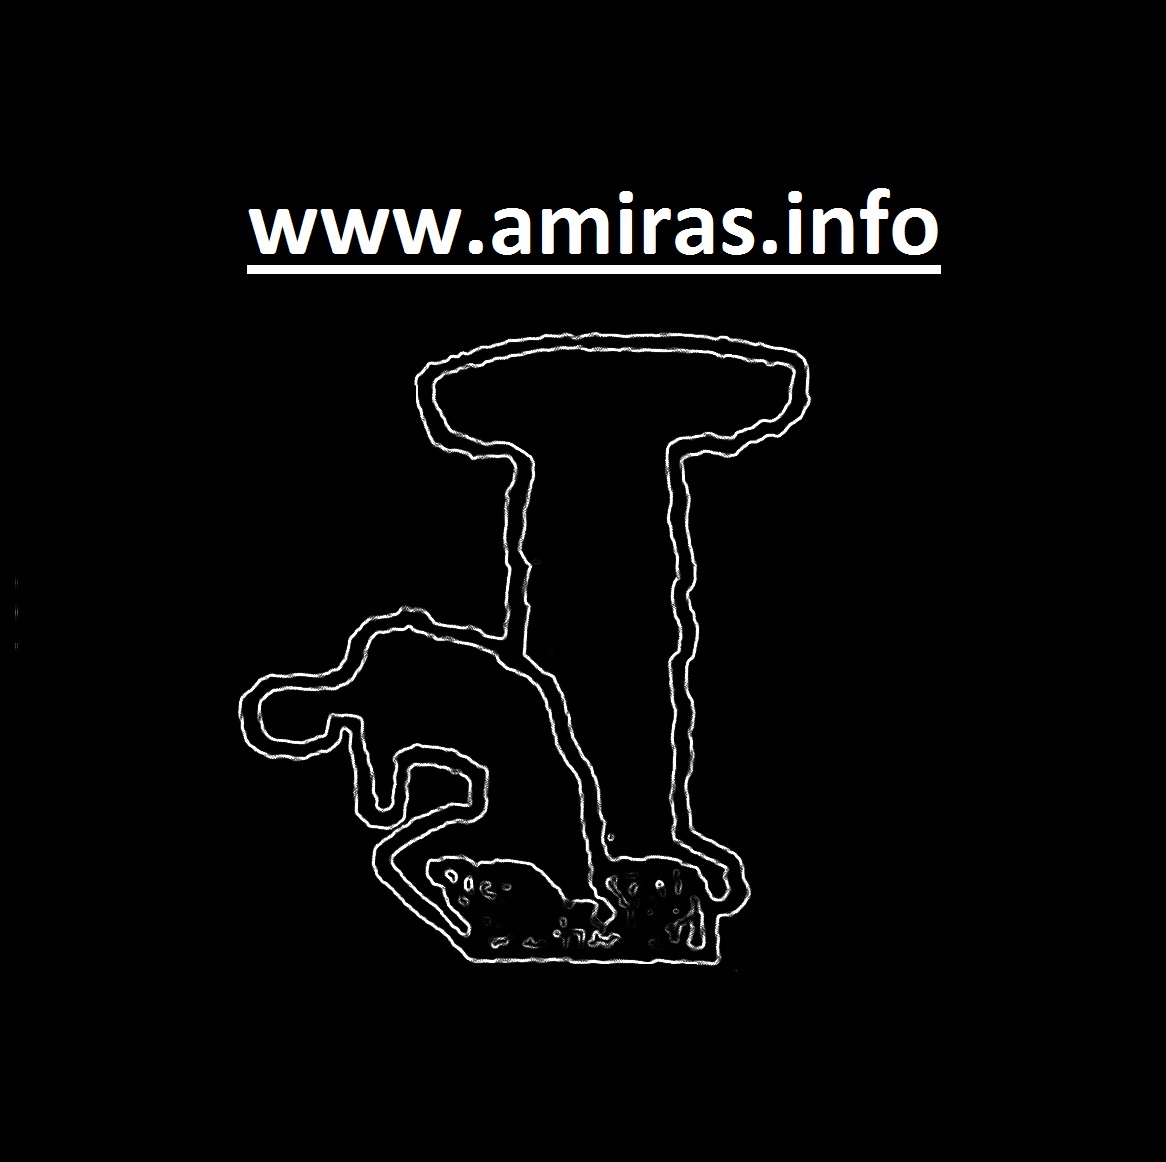 www.amiras.info